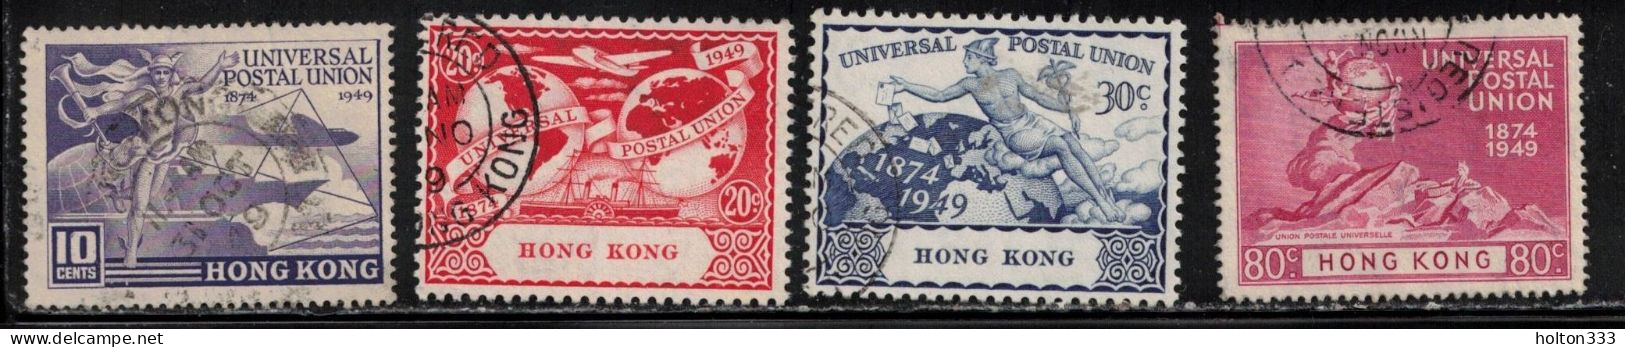 HONG KONG Scott # 180-3 Used - 1949 UPU Issue - Usados